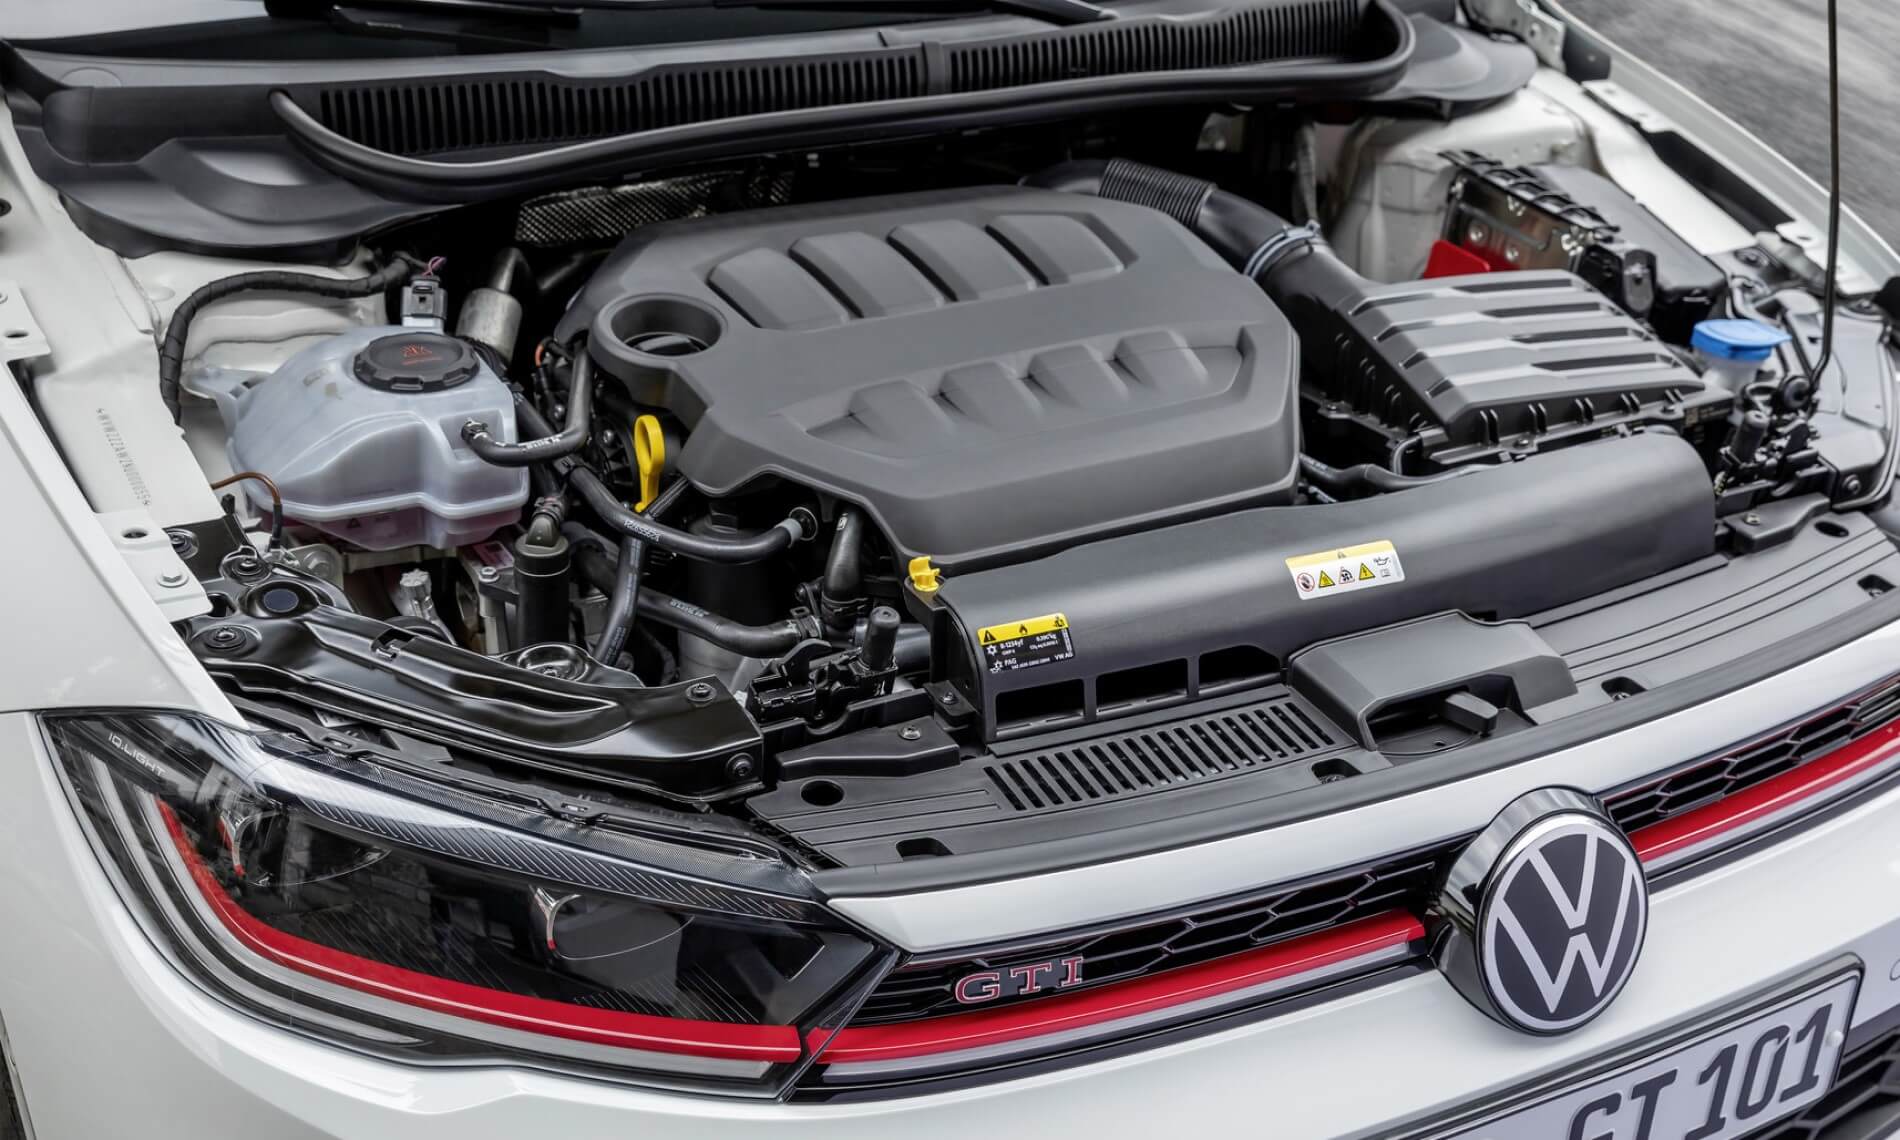 VW Polo GTI engine